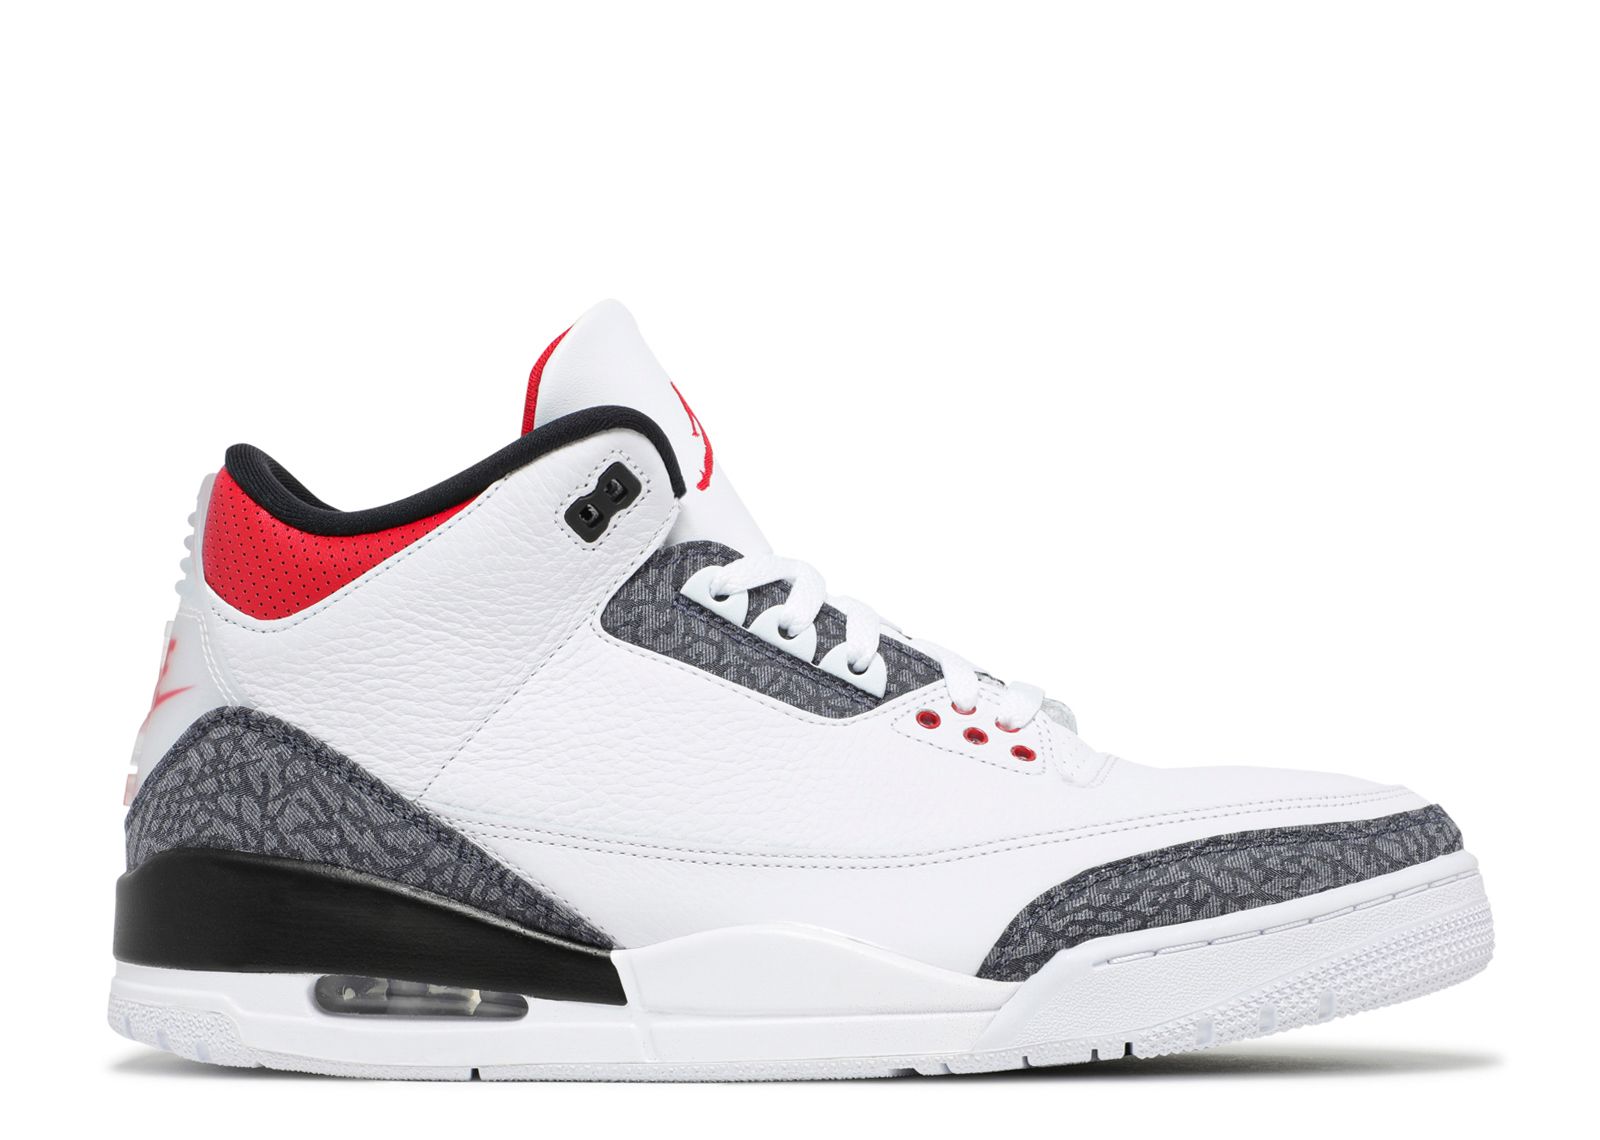 Air Jordan 3 Sneakers | Flight Club موقع شماغ البسام